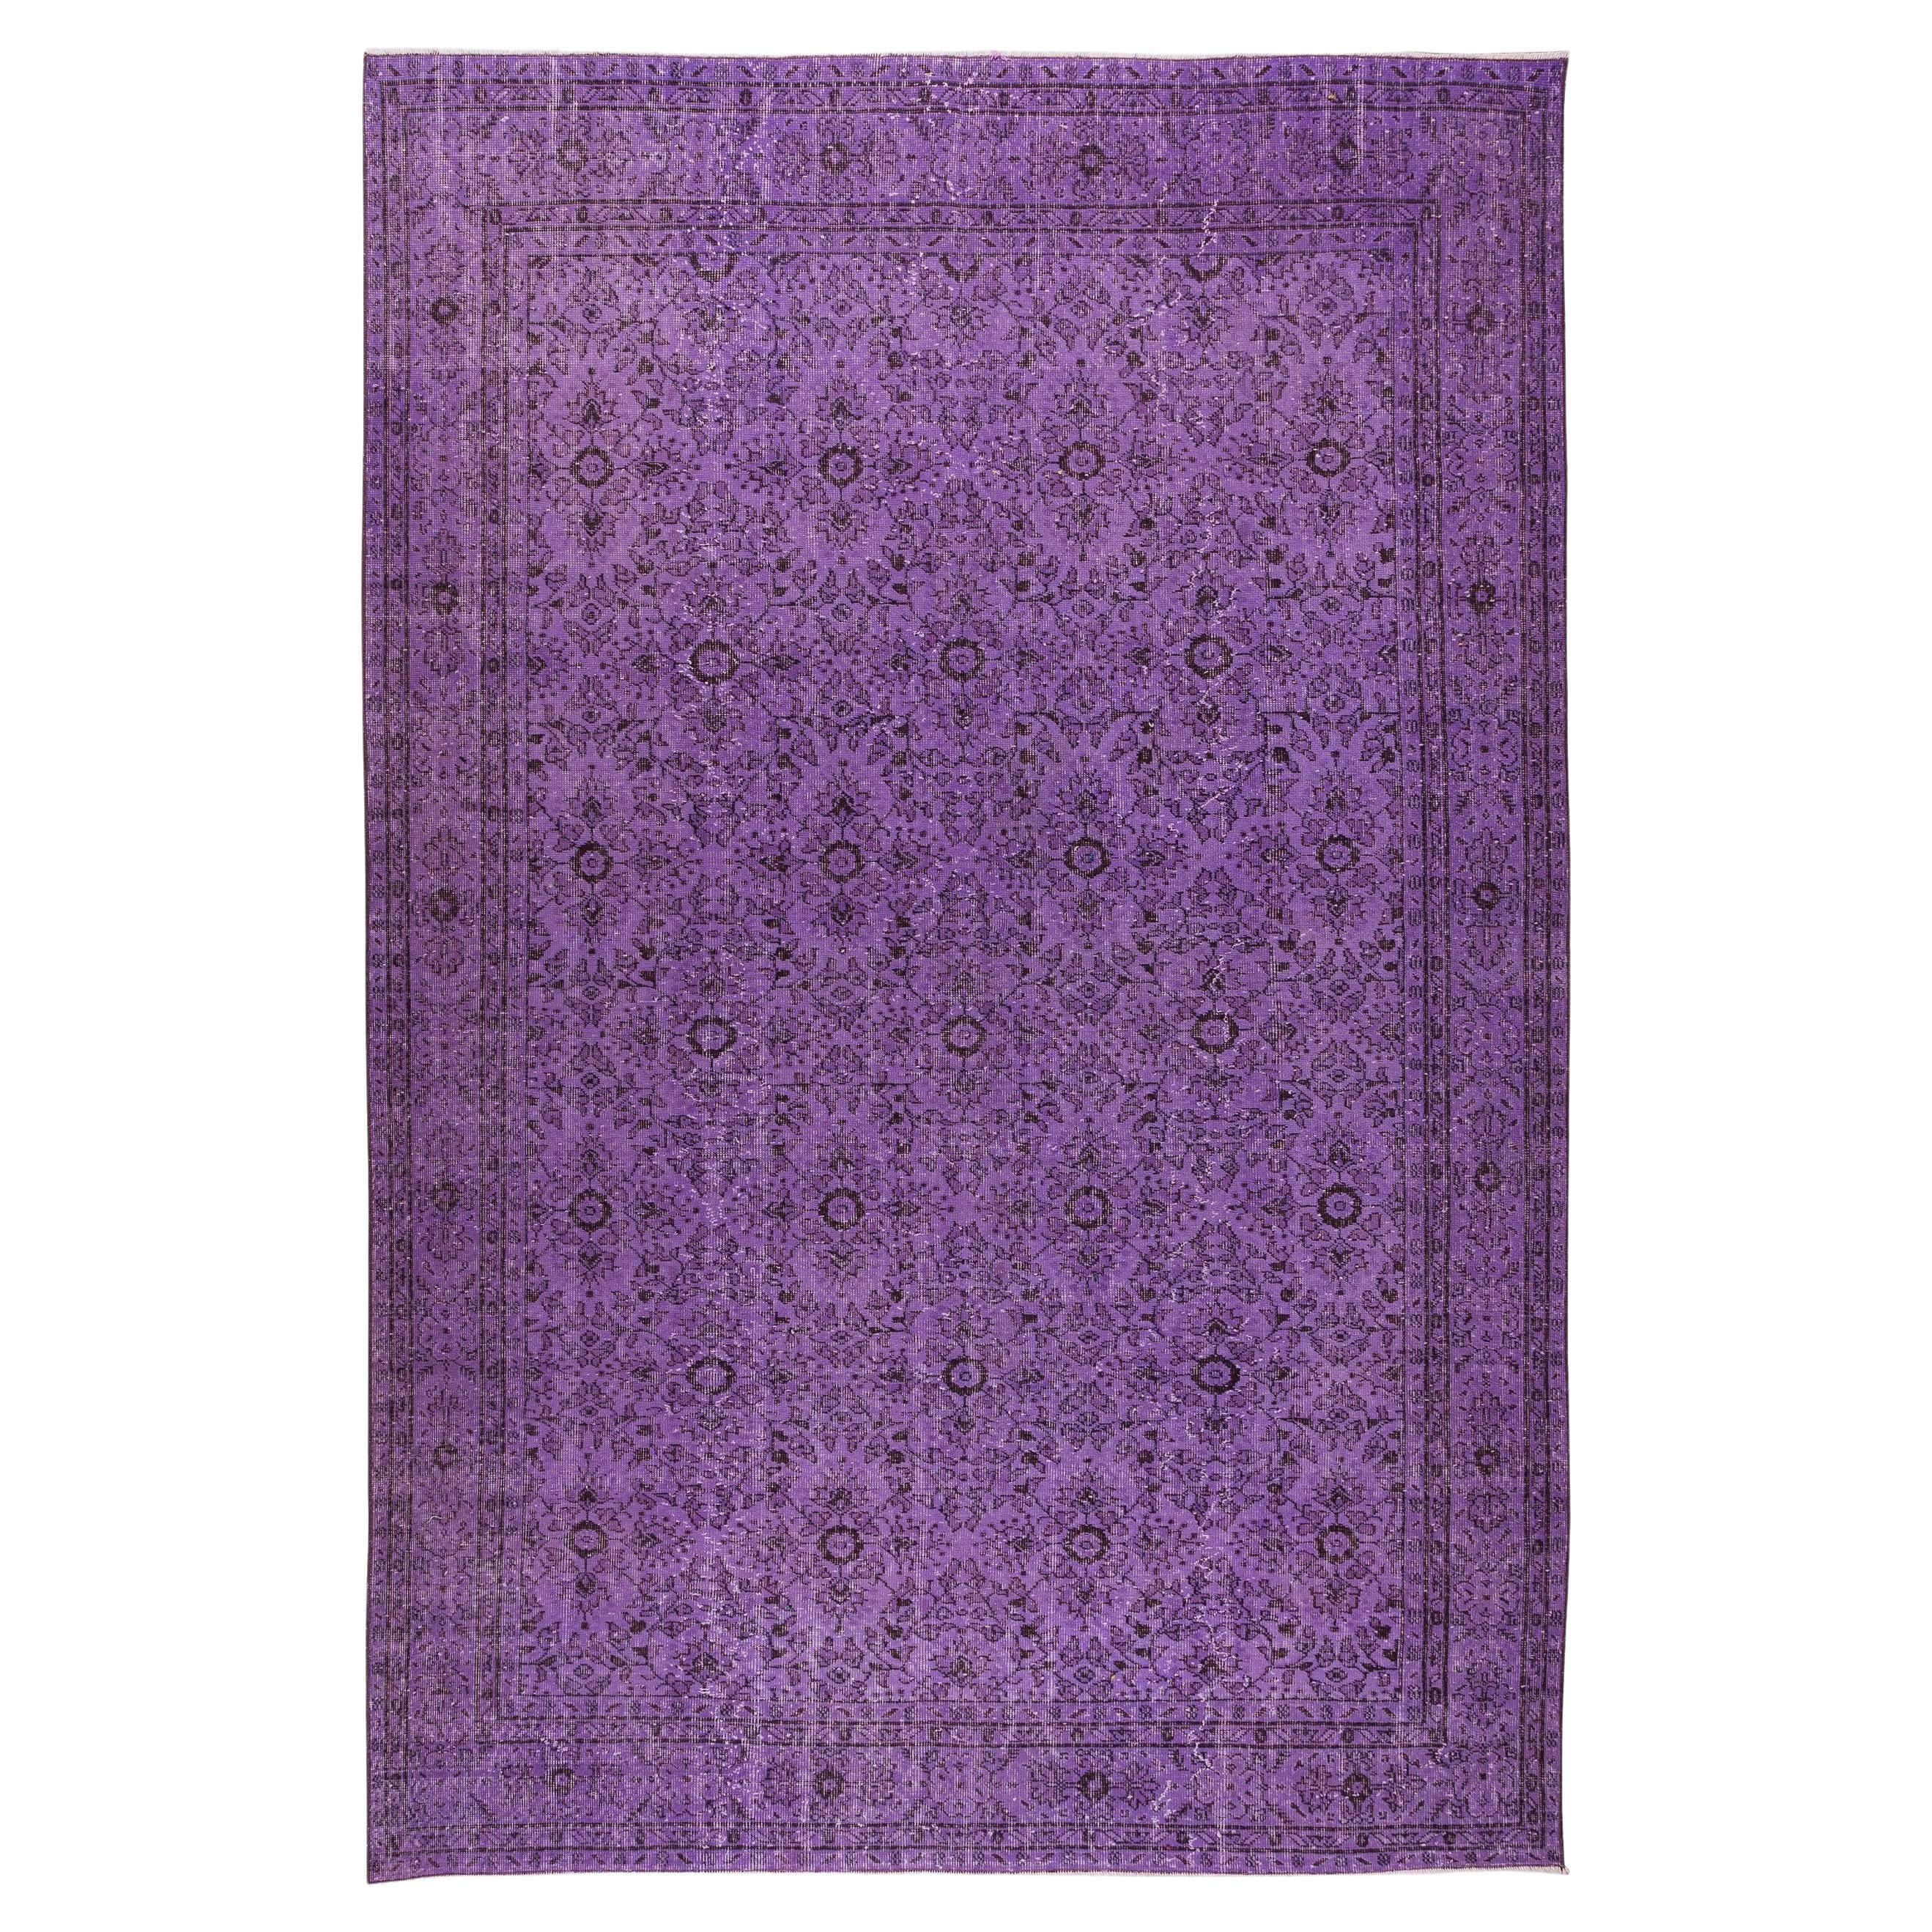 7.3x10.7 Ft Vintage Floral Handmade Turkish Rug in Purple, Woolen Floor Covering